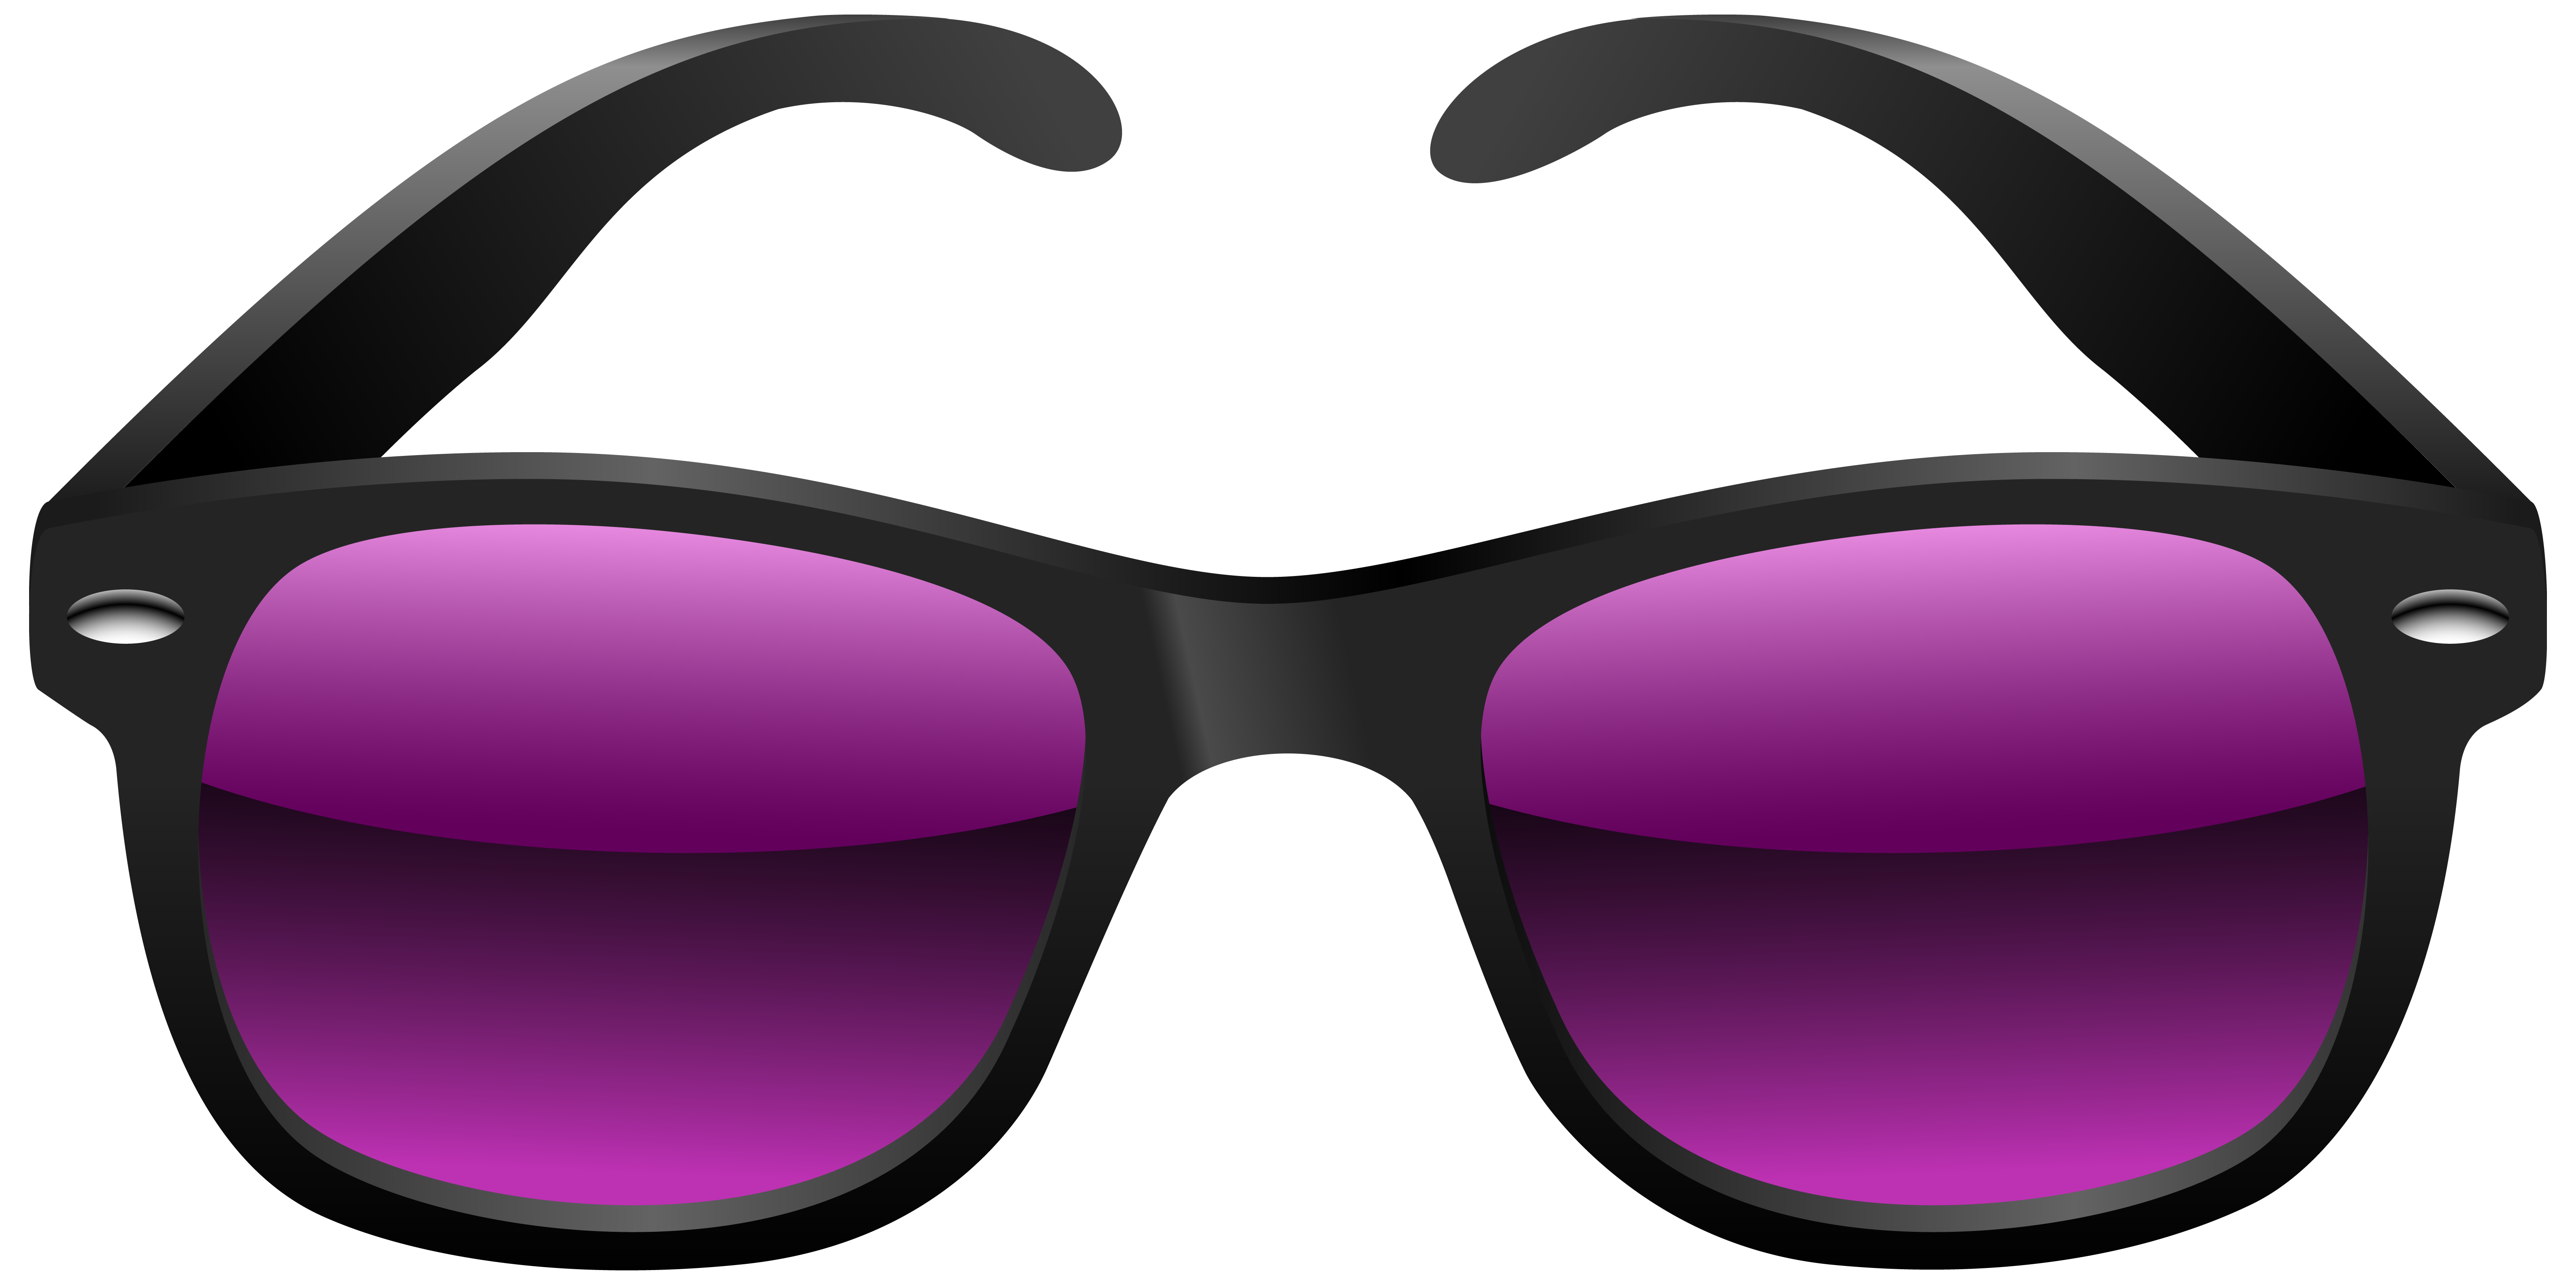 Black and purple image. Sunglasses clipart